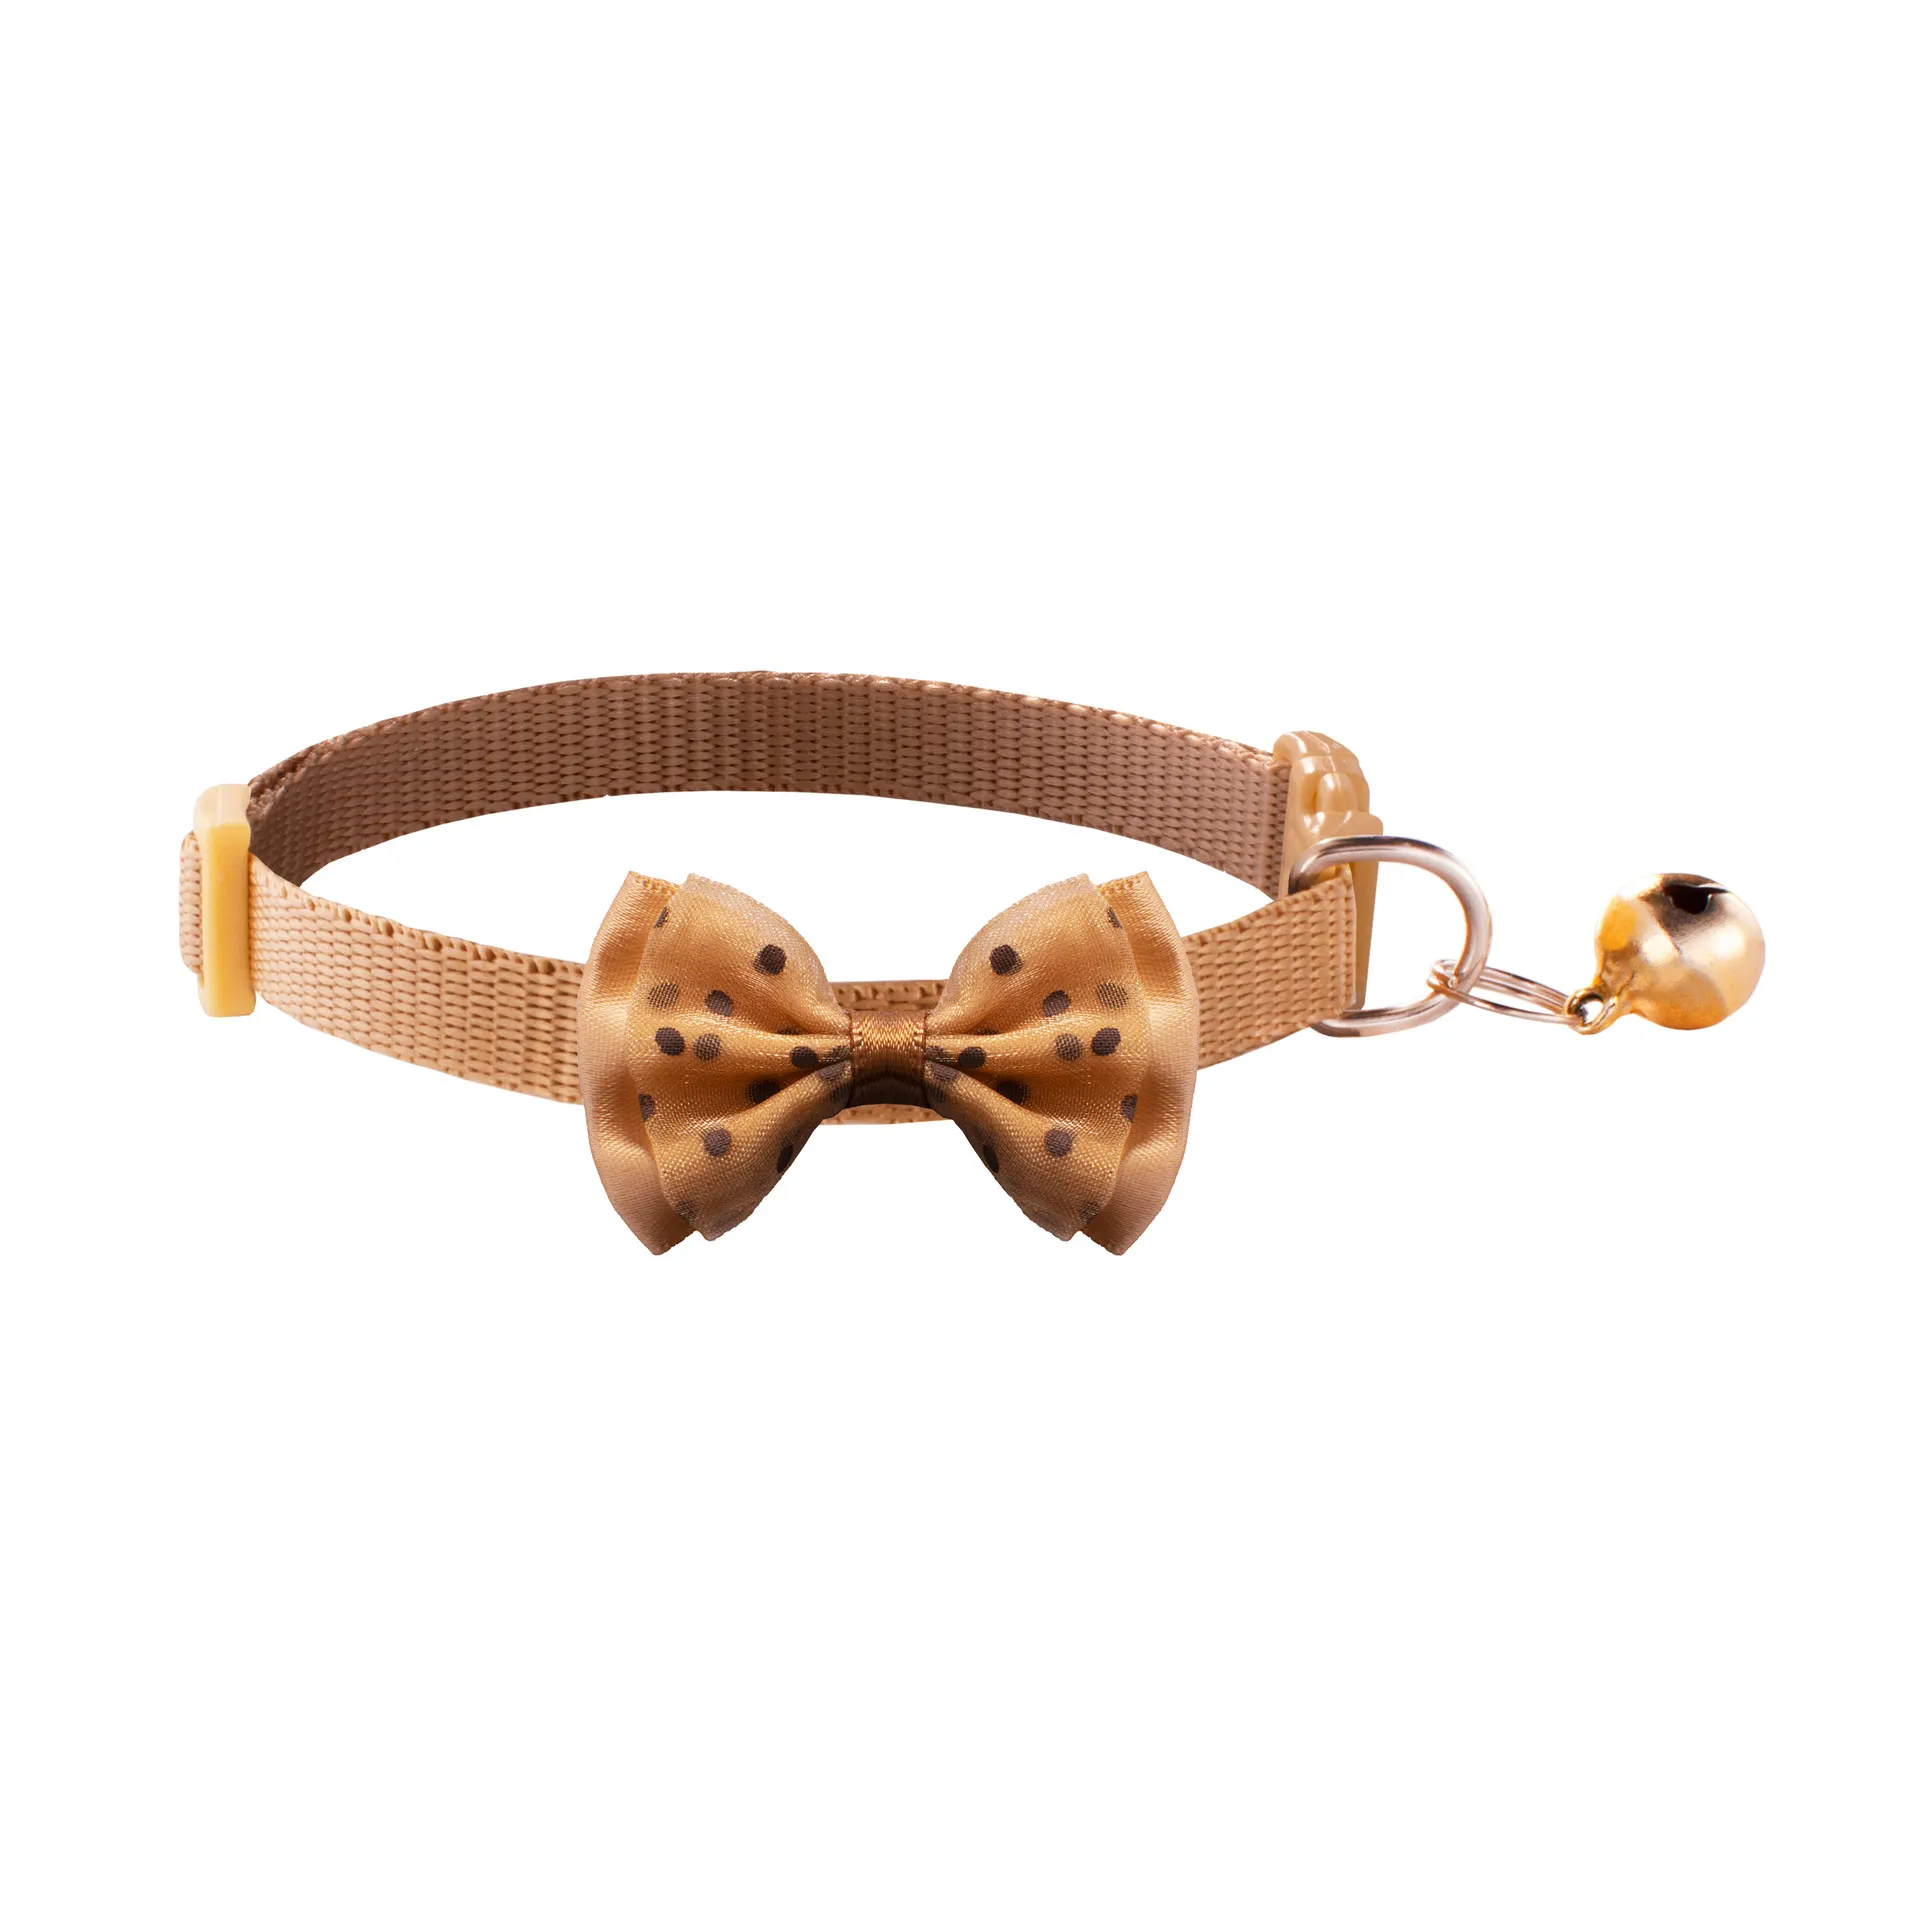 Adjustable Multi-colors Bow design dog cat collar